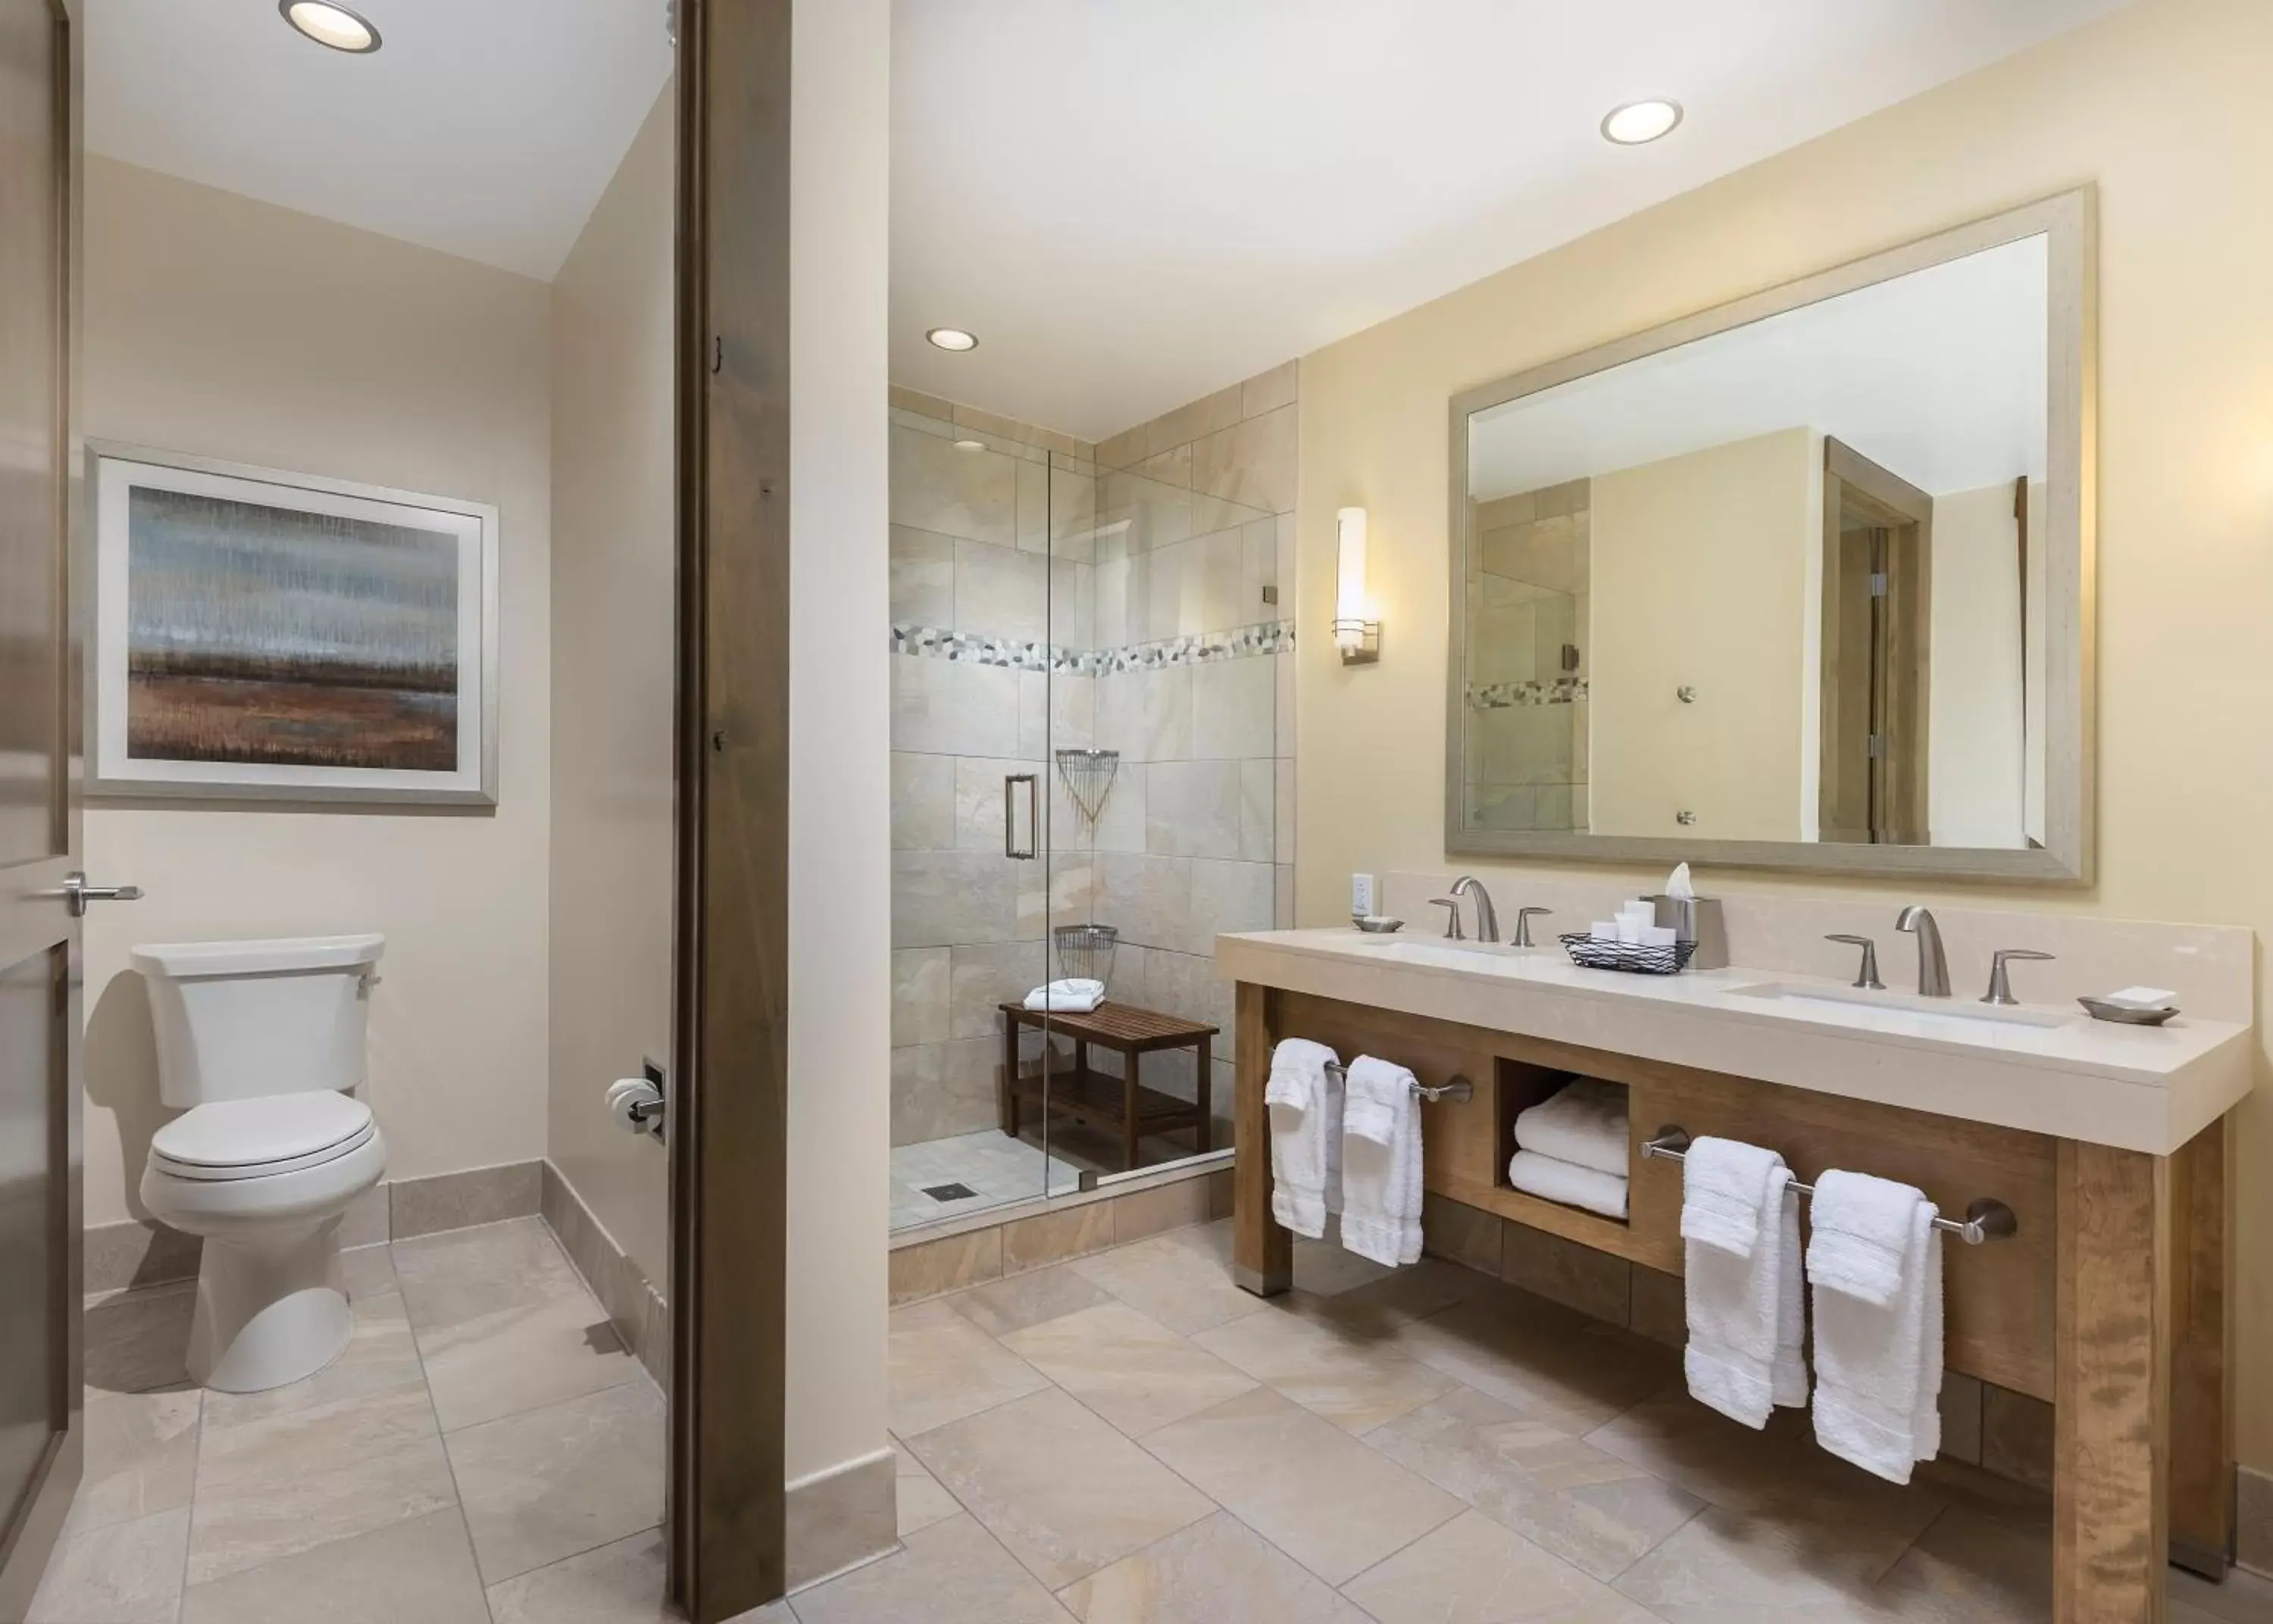 Photo of the whole room, Bathroom in Club Wyndham Resort at Avon